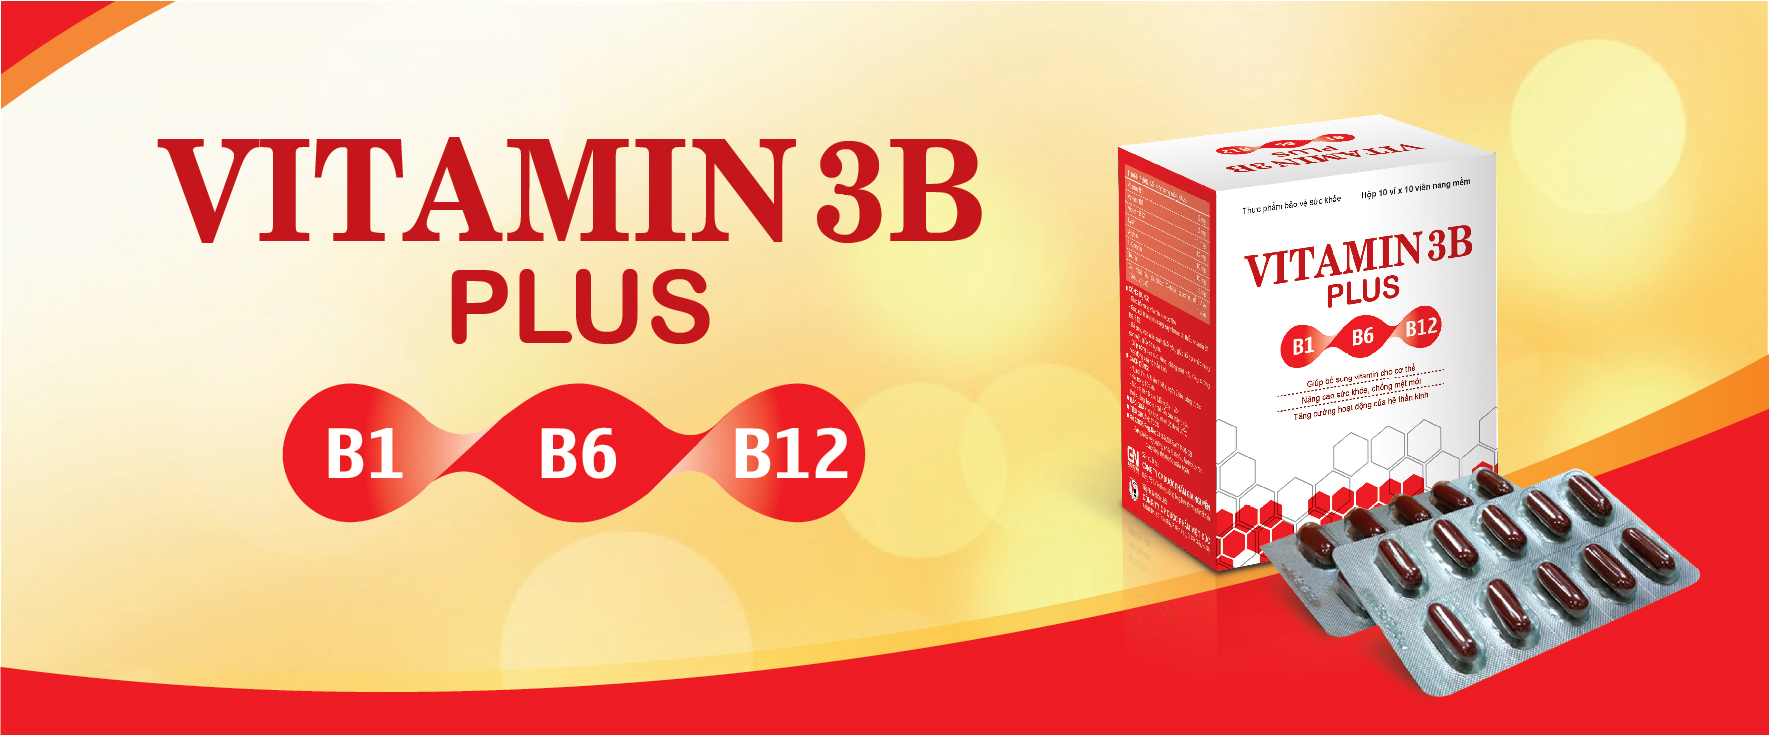 Vitamin 3B plus